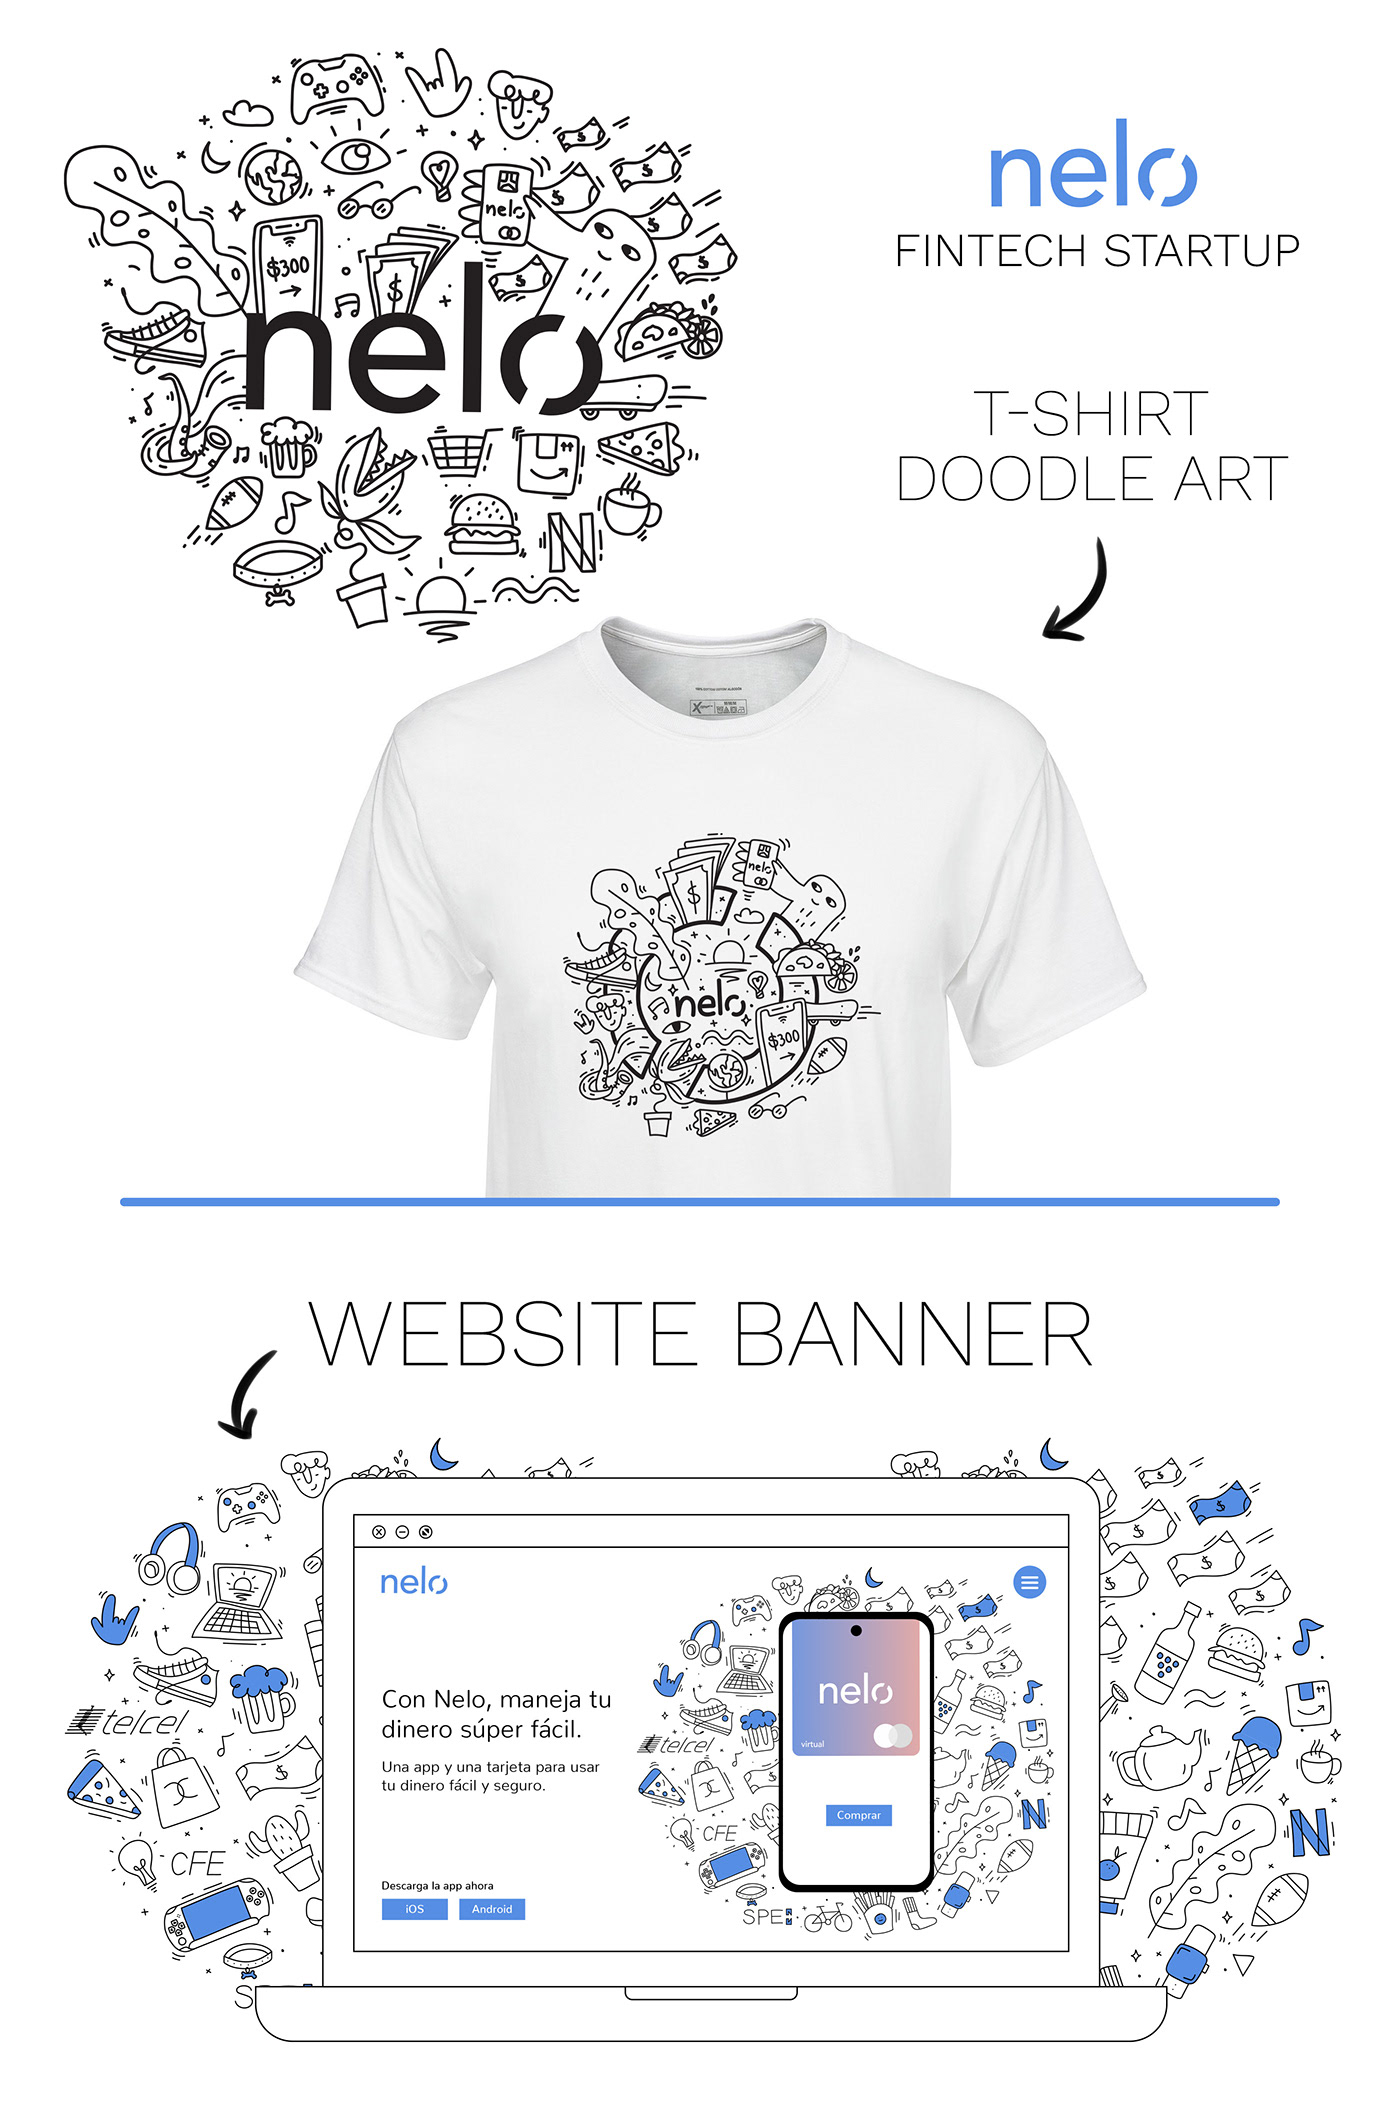 Website and T-shirt doodle art